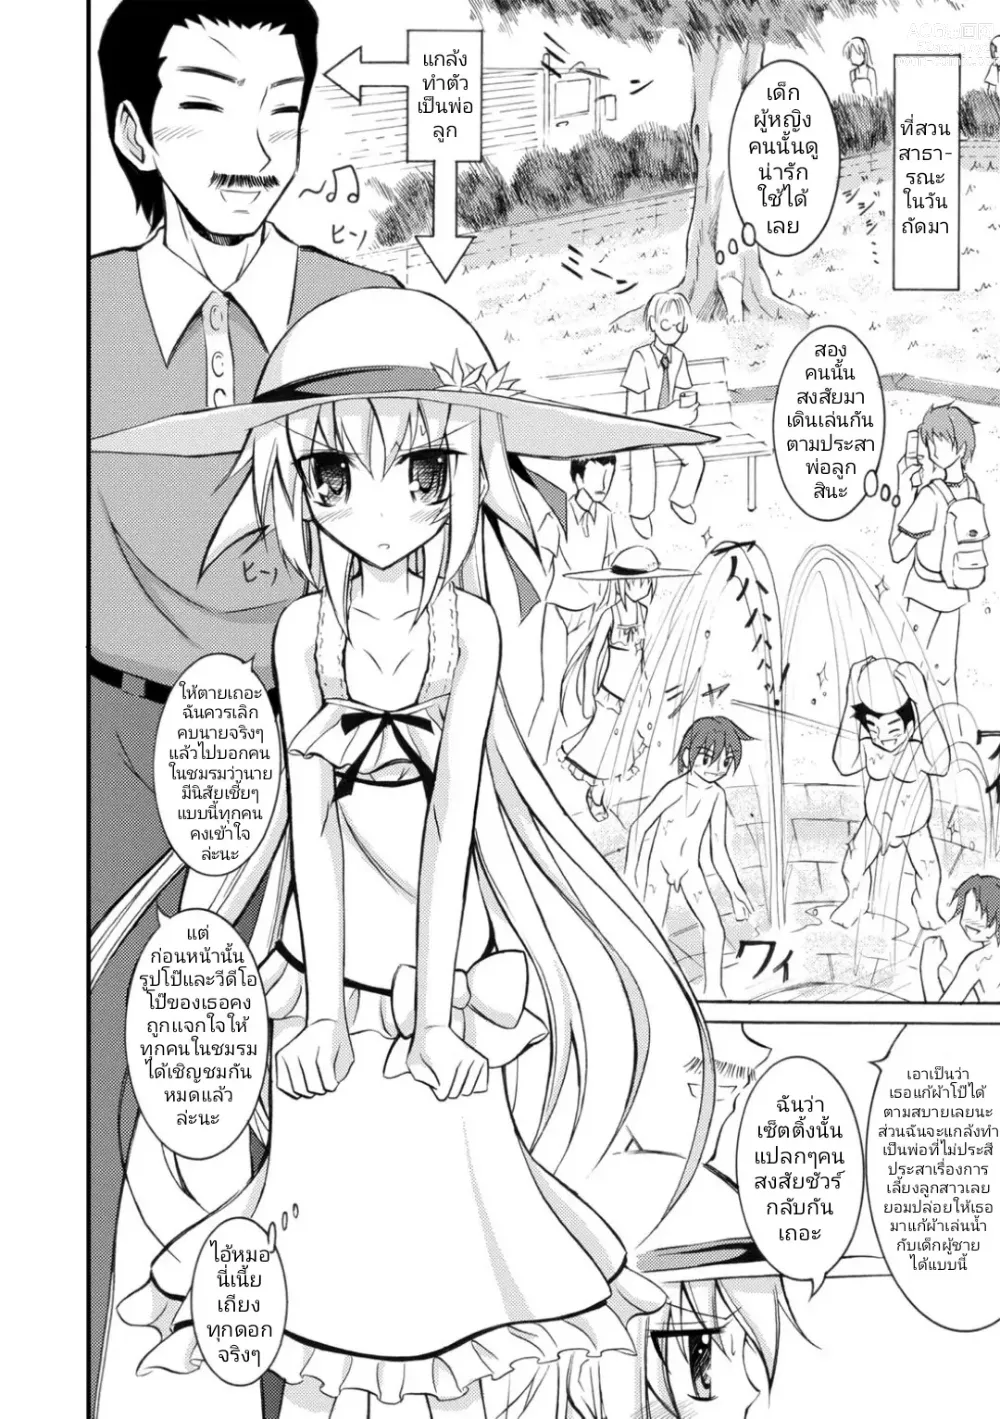 Page 4 of manga การละเล่นเปิดตัวที่สวนสาธารณะ